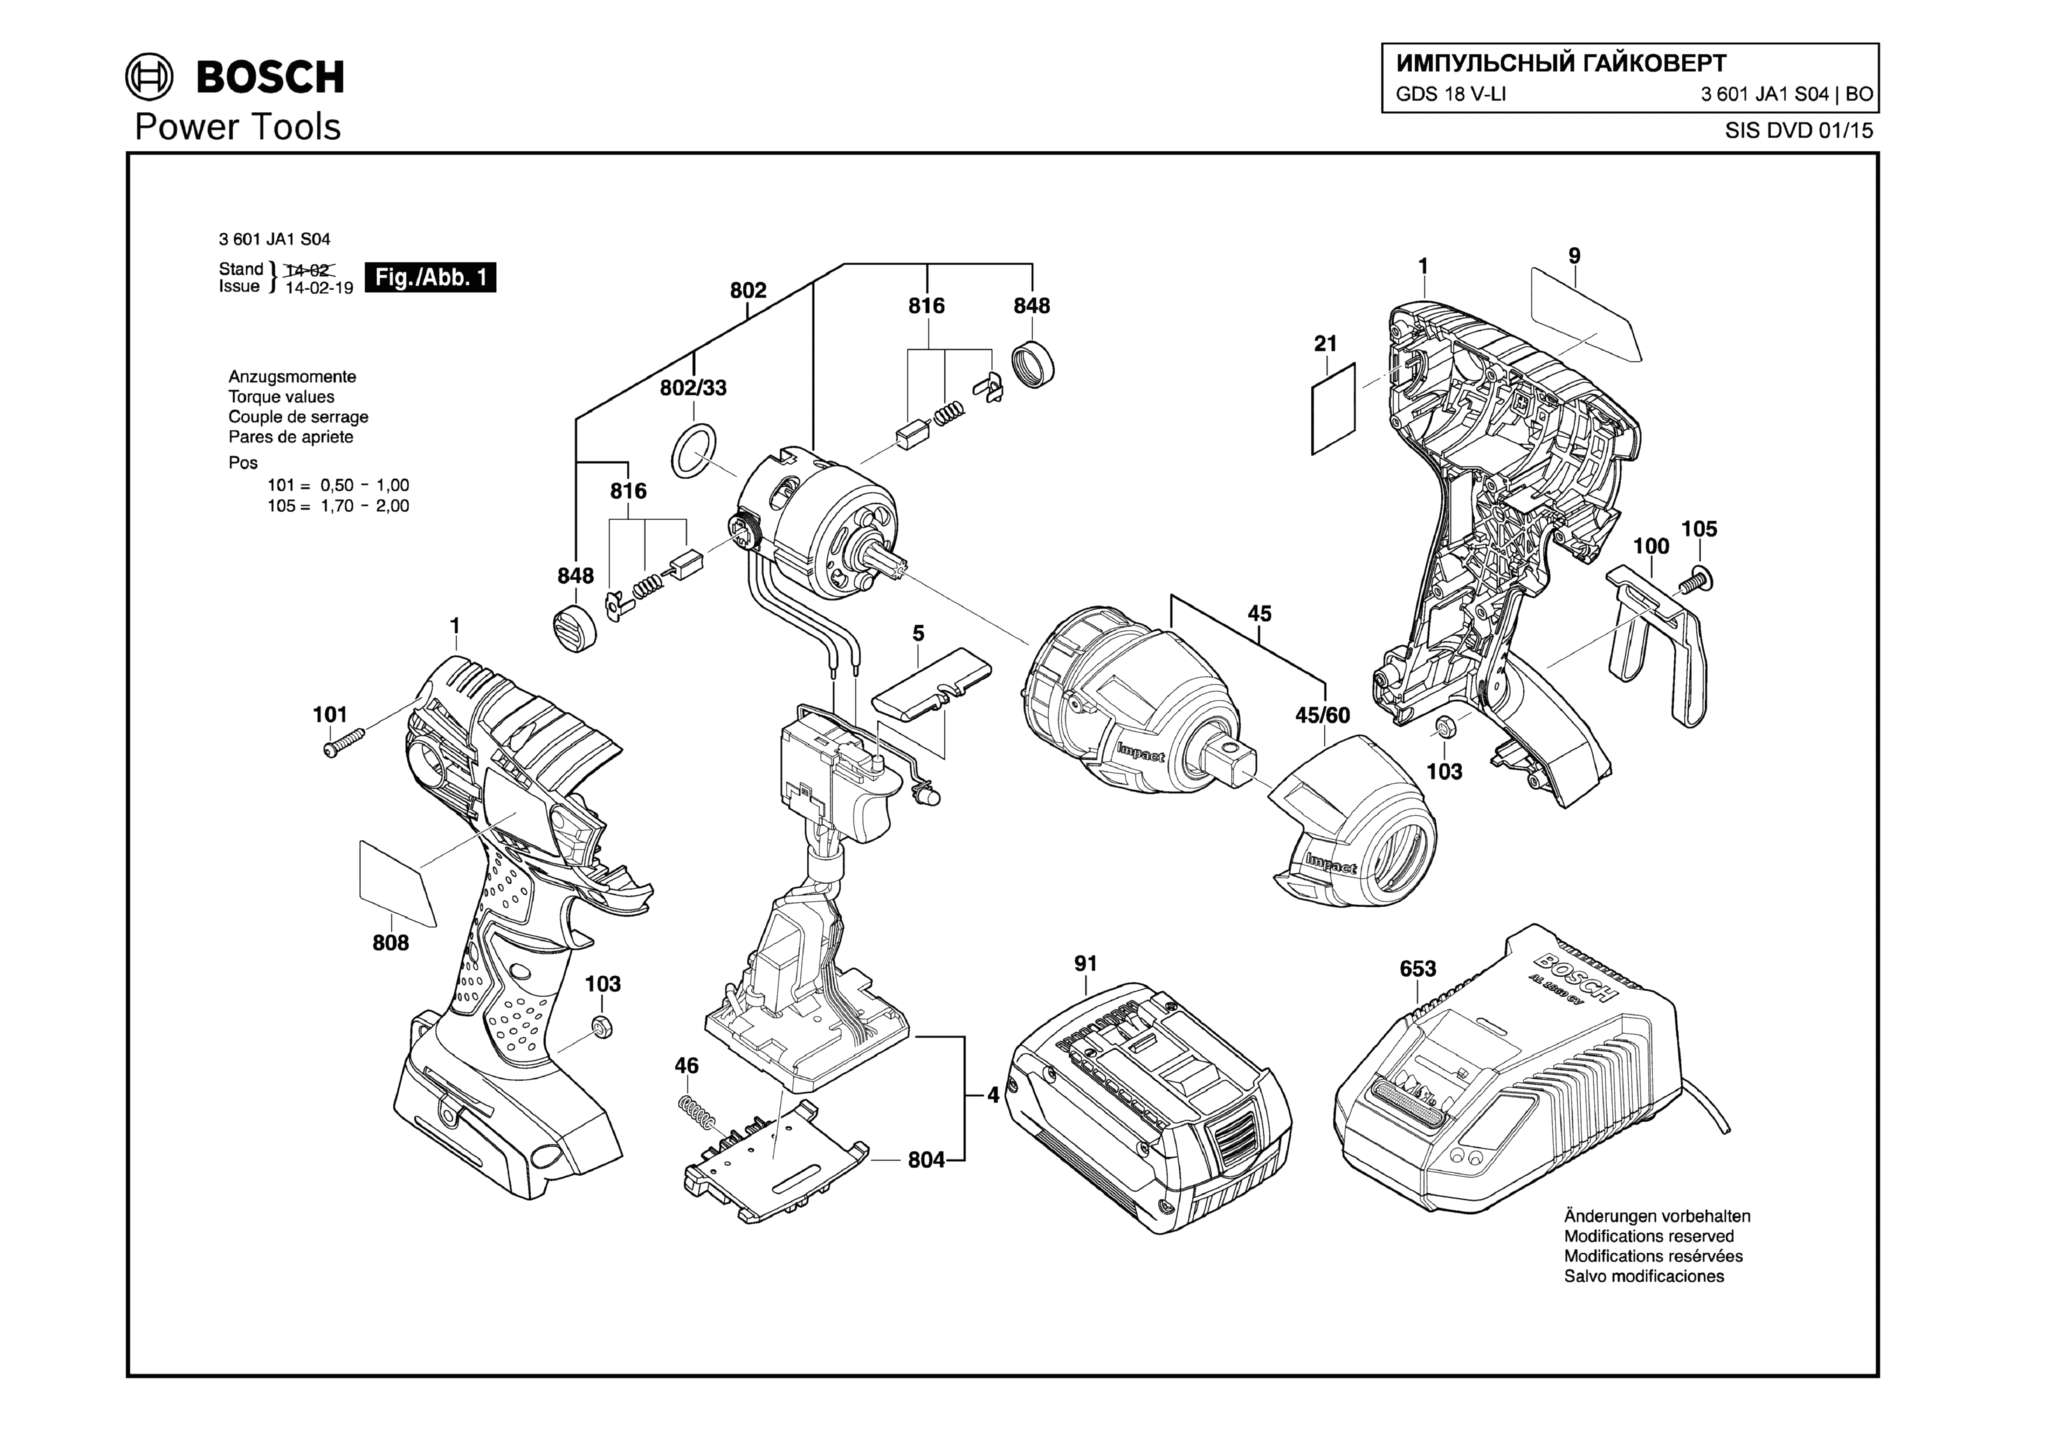 Запчасти, схема и деталировка Bosch GDS 18 V-LI (ТИП 3601JA1S04)